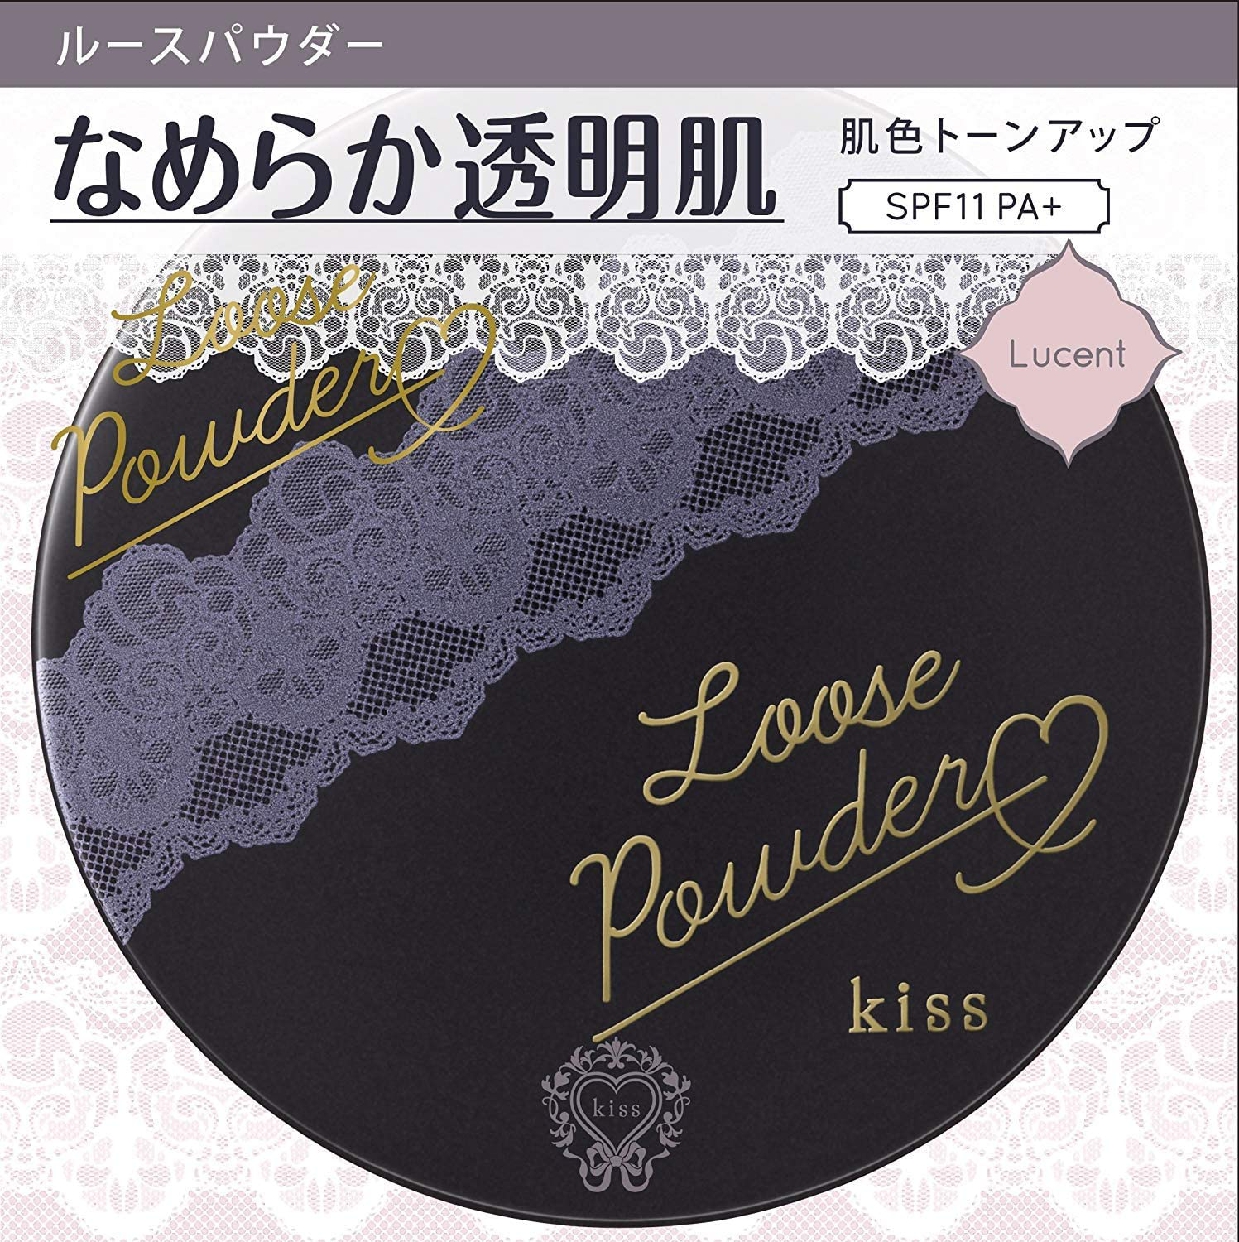 kiss(キス) ルースパウダー ルーセントの商品画像サムネ1 